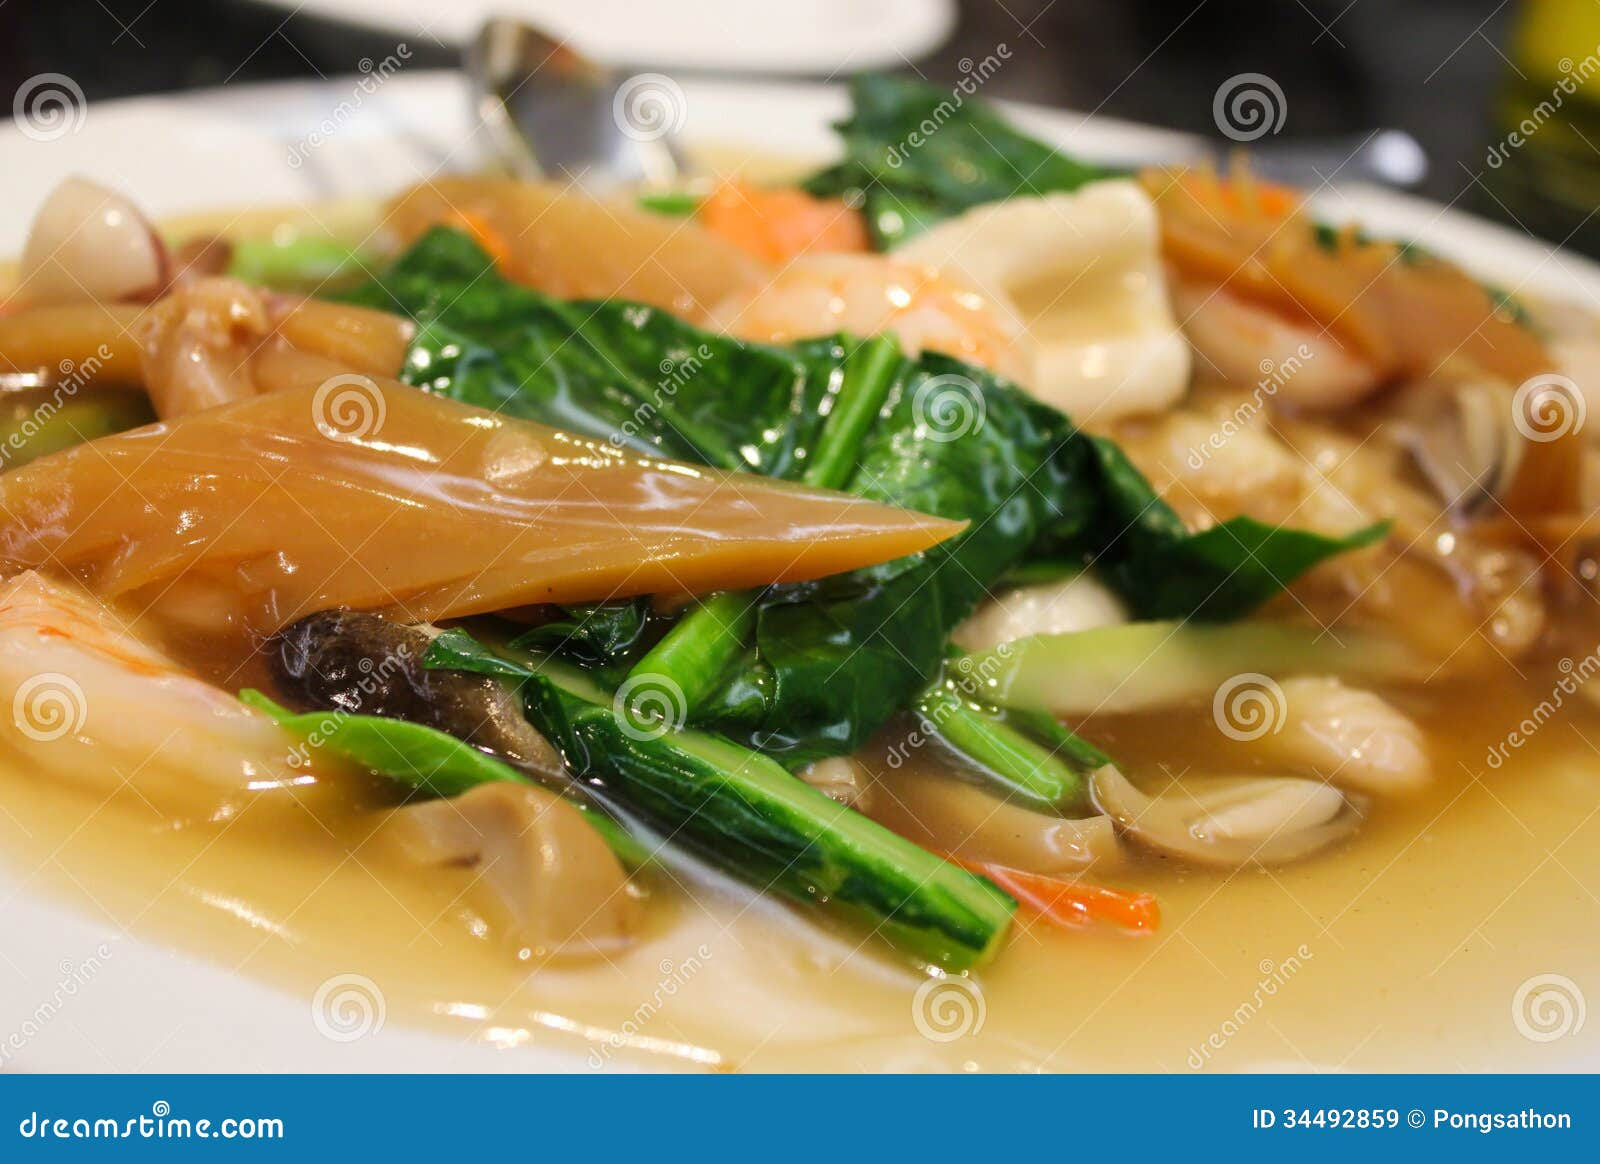 Chinese Food Menu Take OUt Recipes Meme Box Noodles Near ...